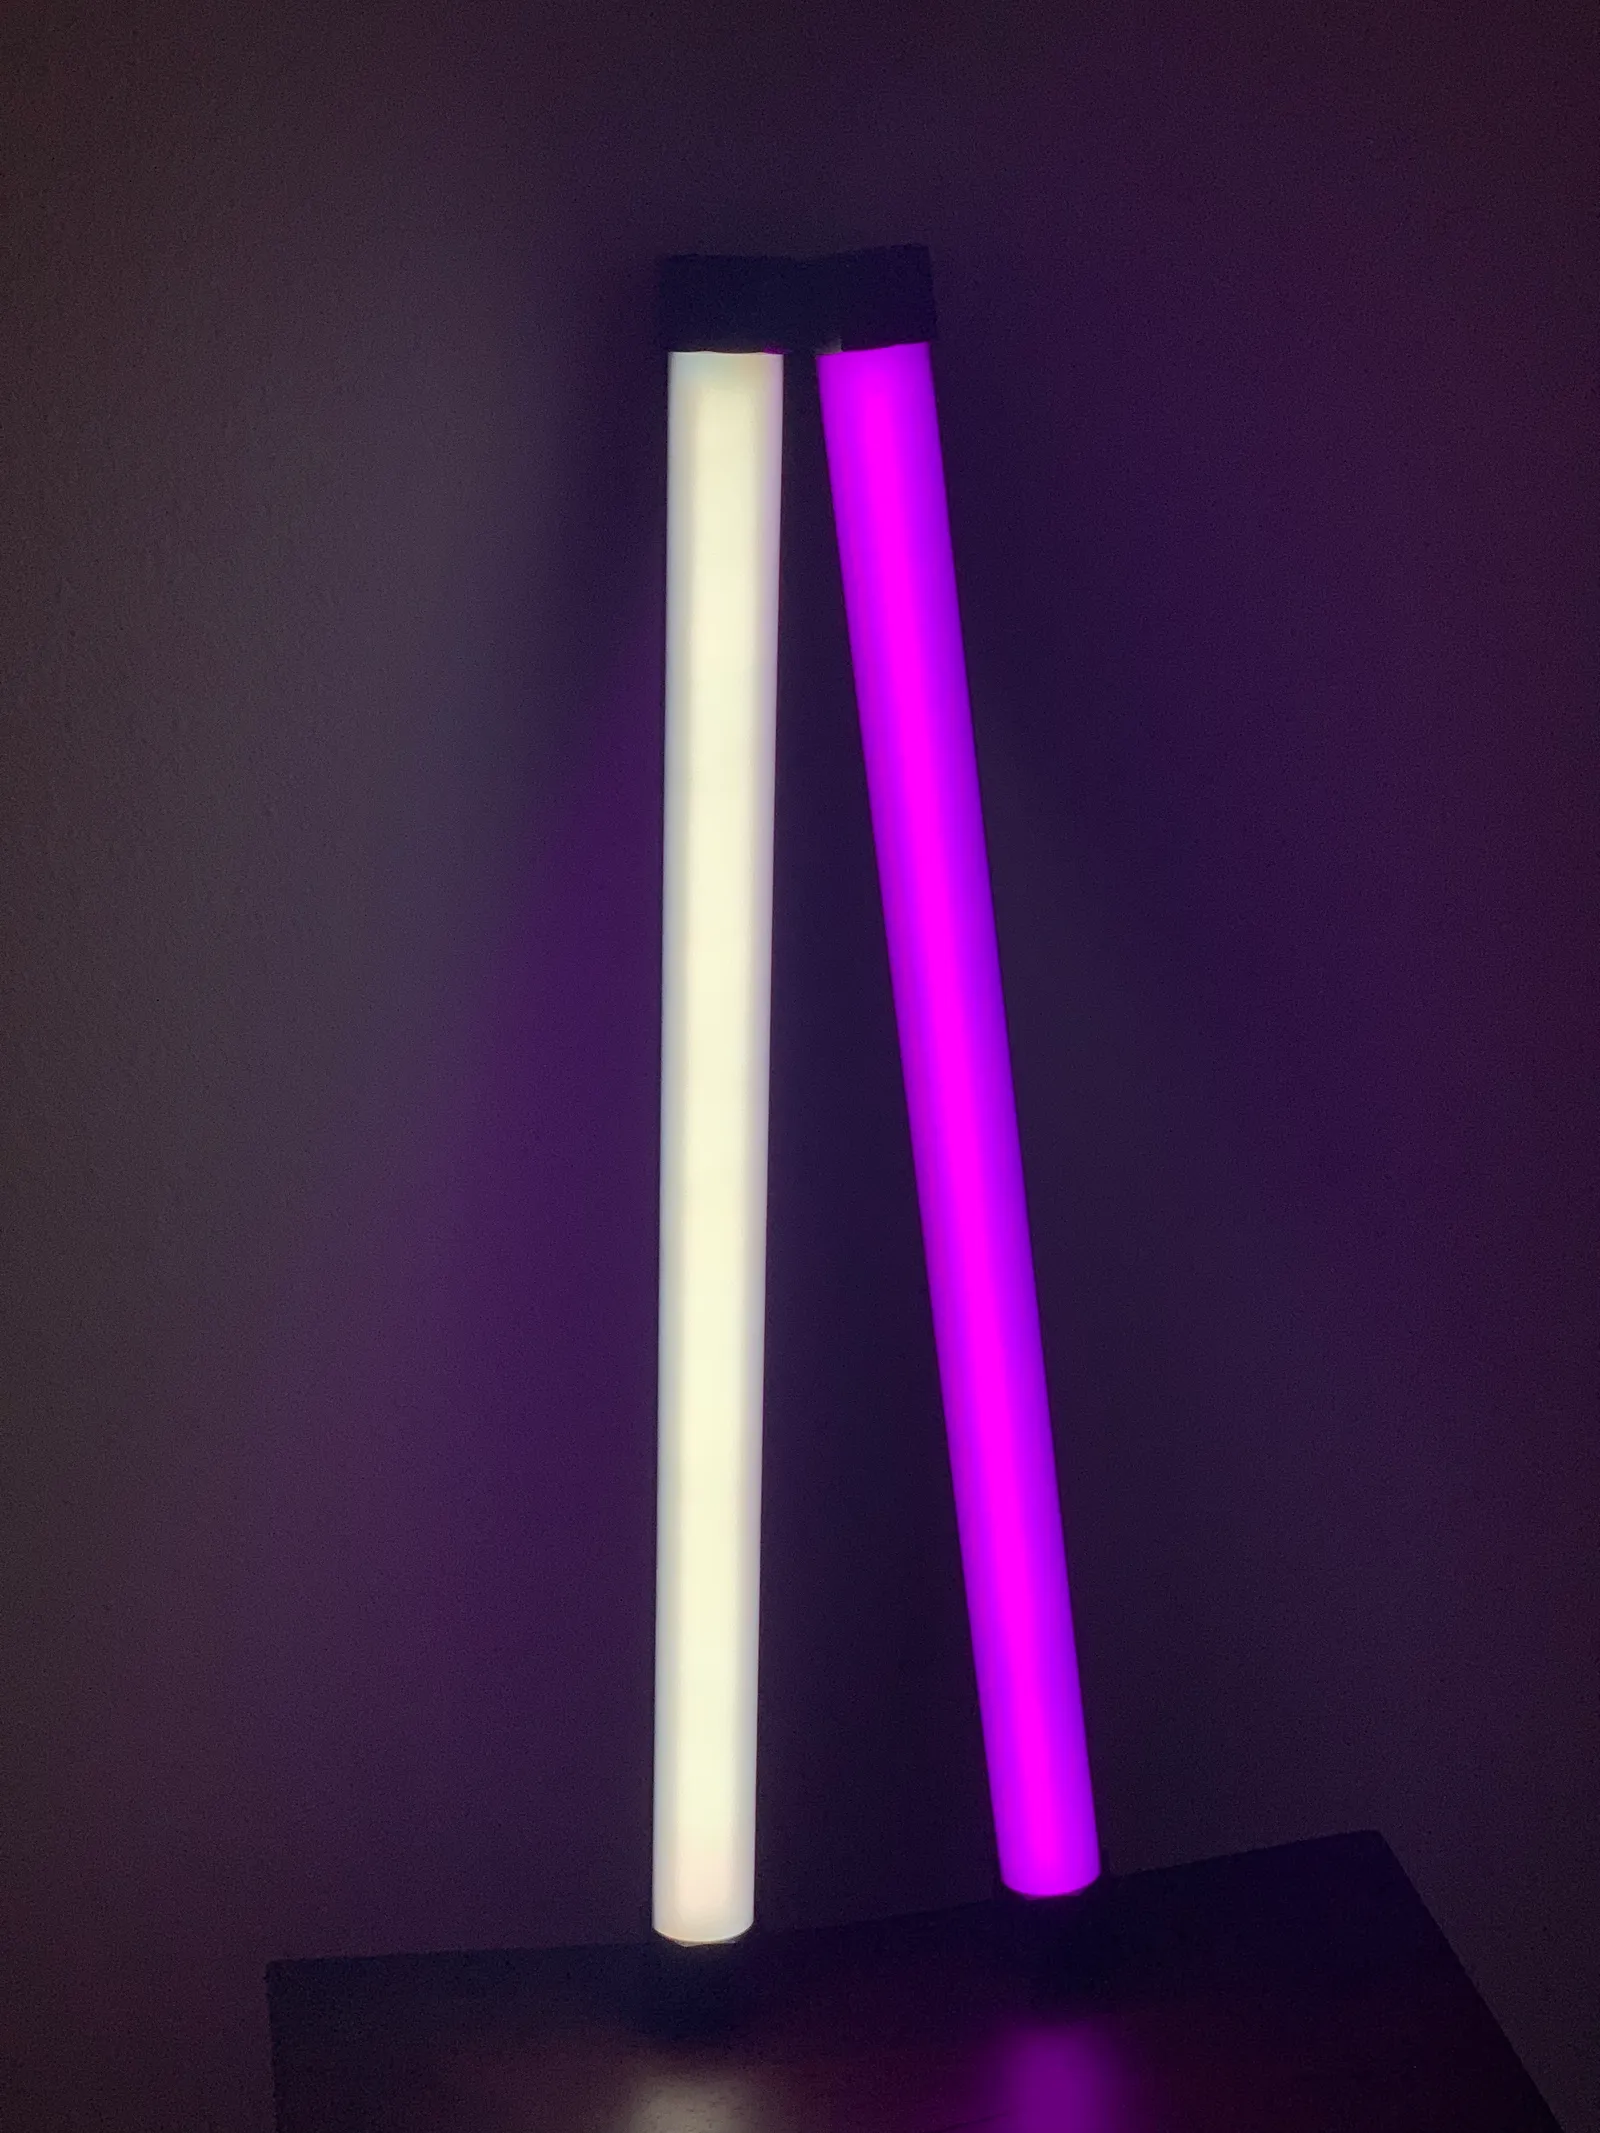 Nanlite PavoTube II 15X RGB LED Pixel Tube Light (2', 2-Light Kit)